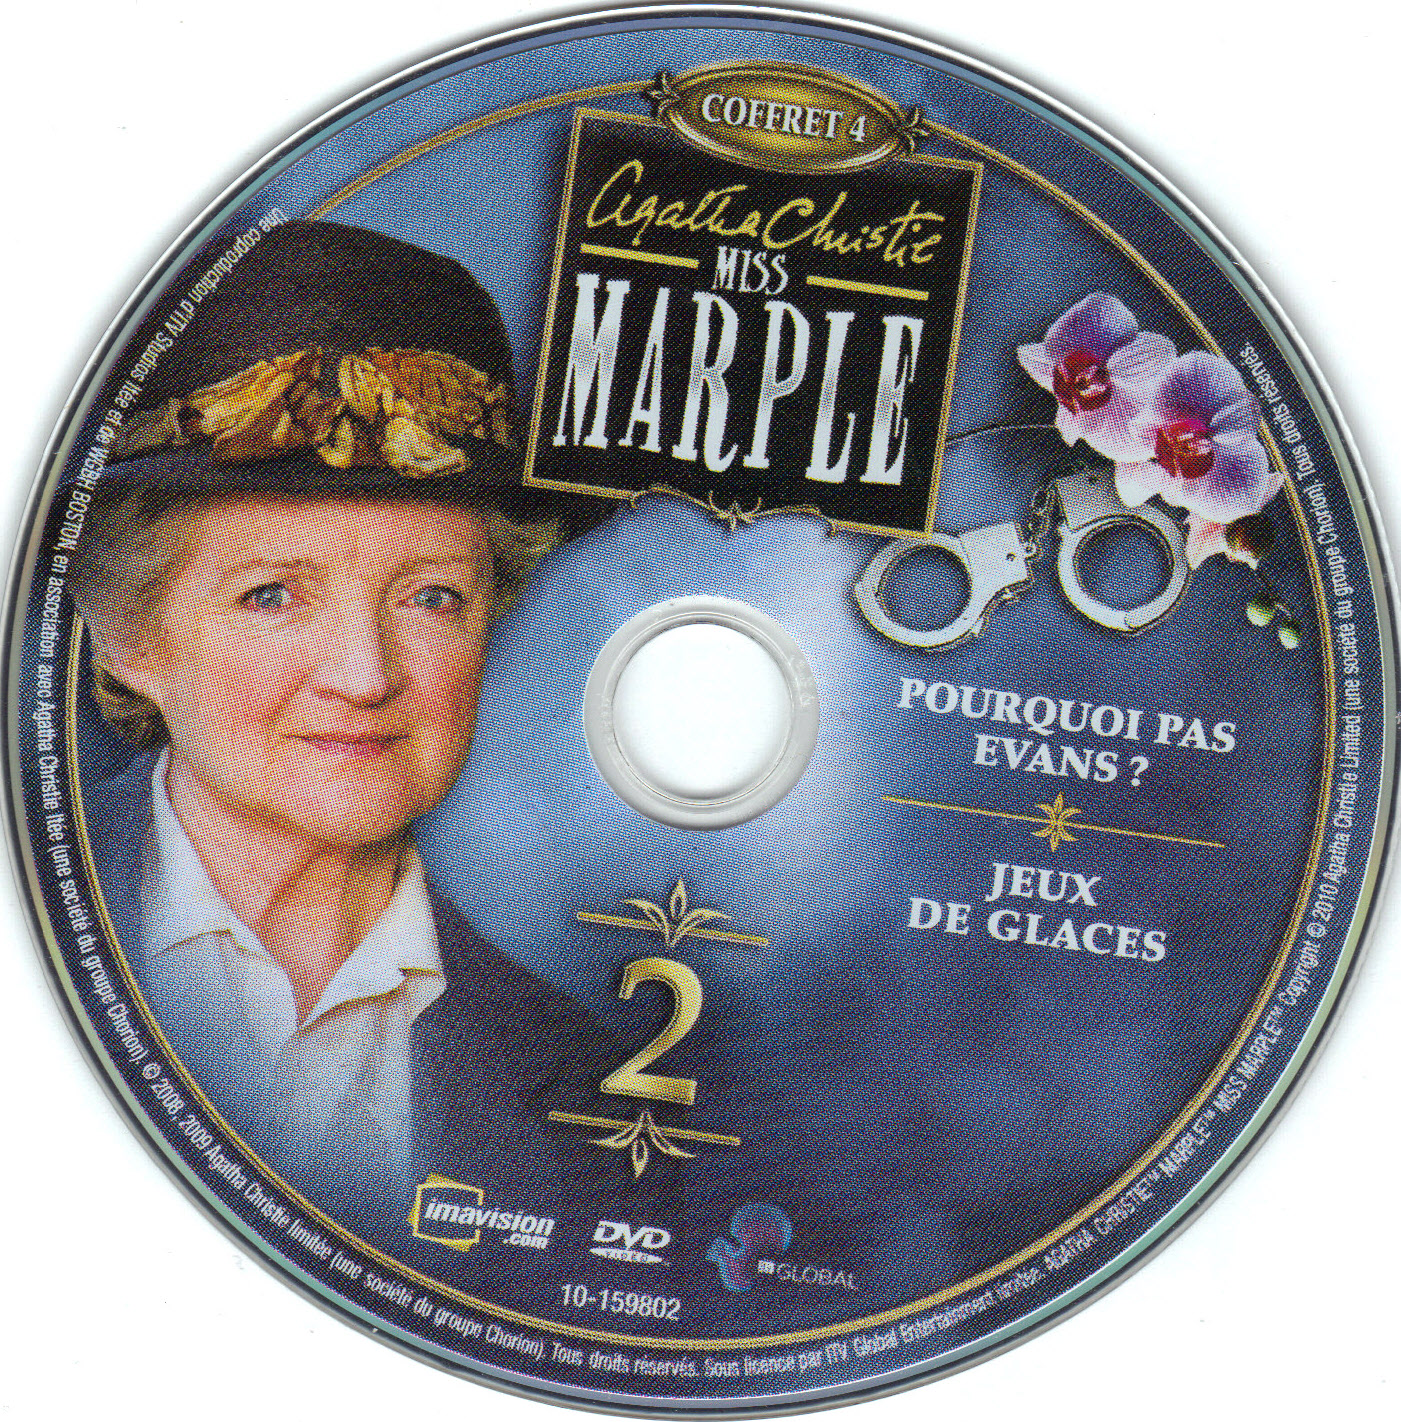 Miss Marple Coffret 4 Disc 2